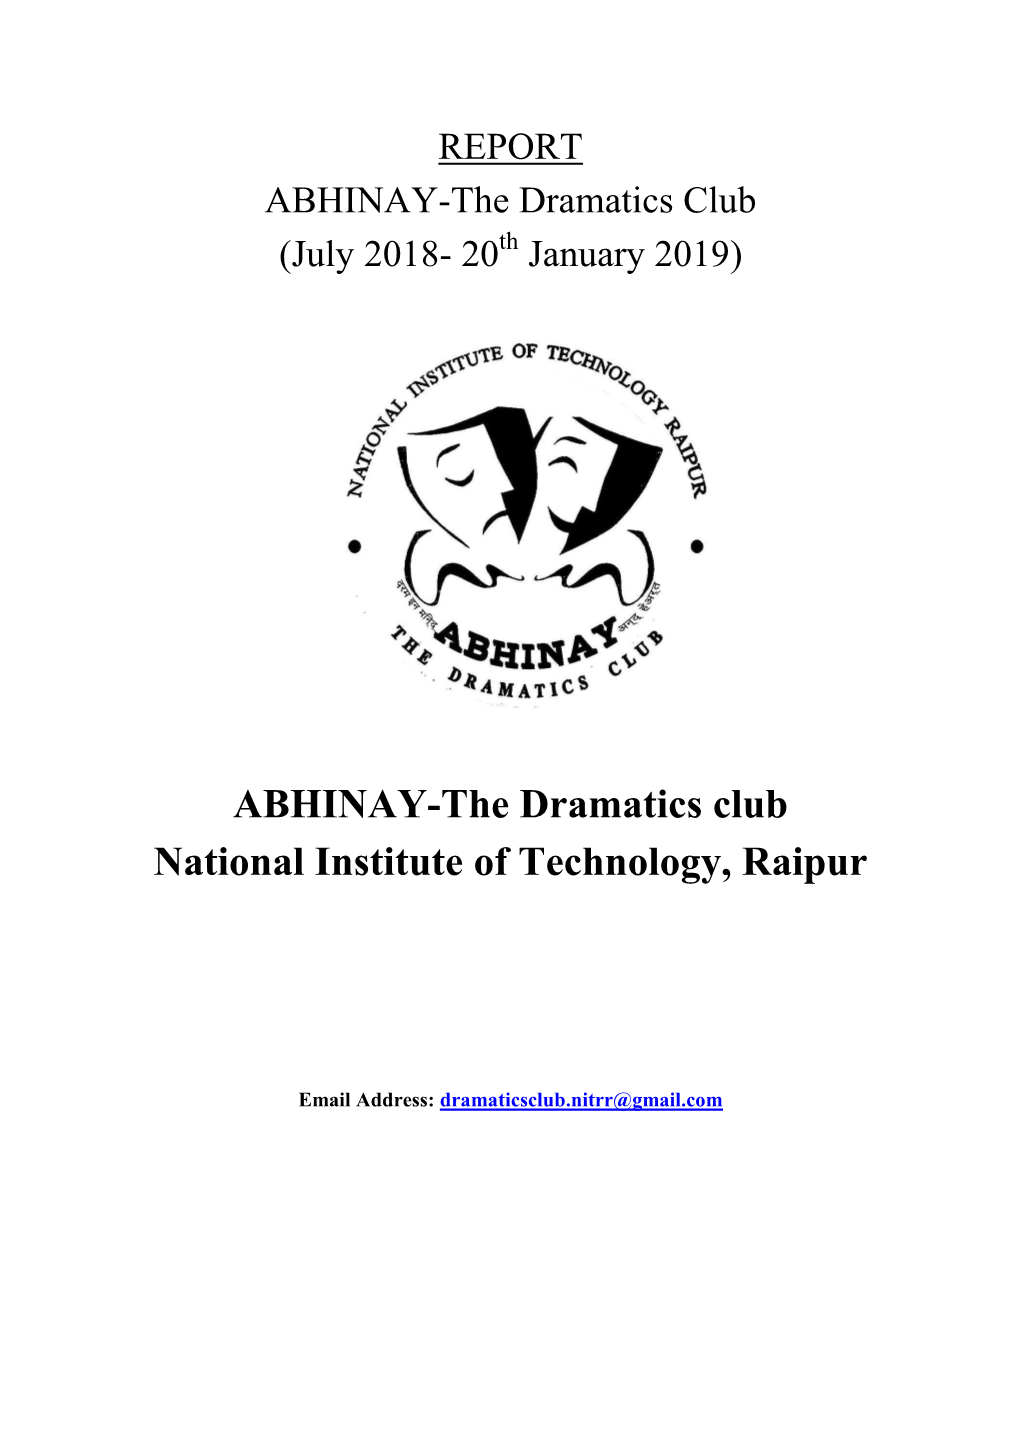 ABHINAY-The Dramatics Club National Institute of Technology, Raipur